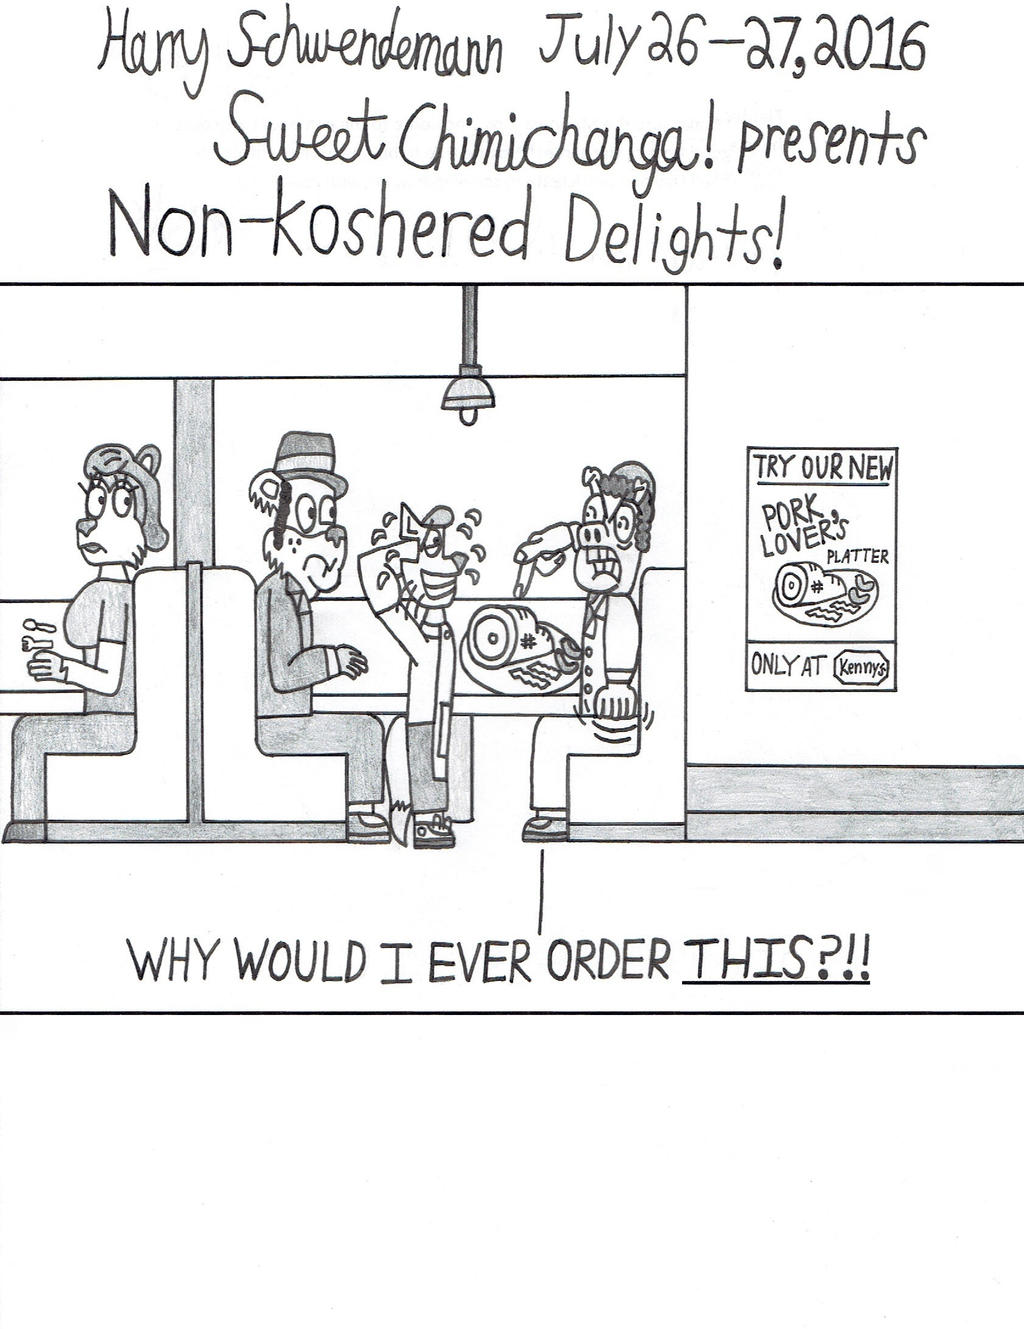 Non-koshered Delights!